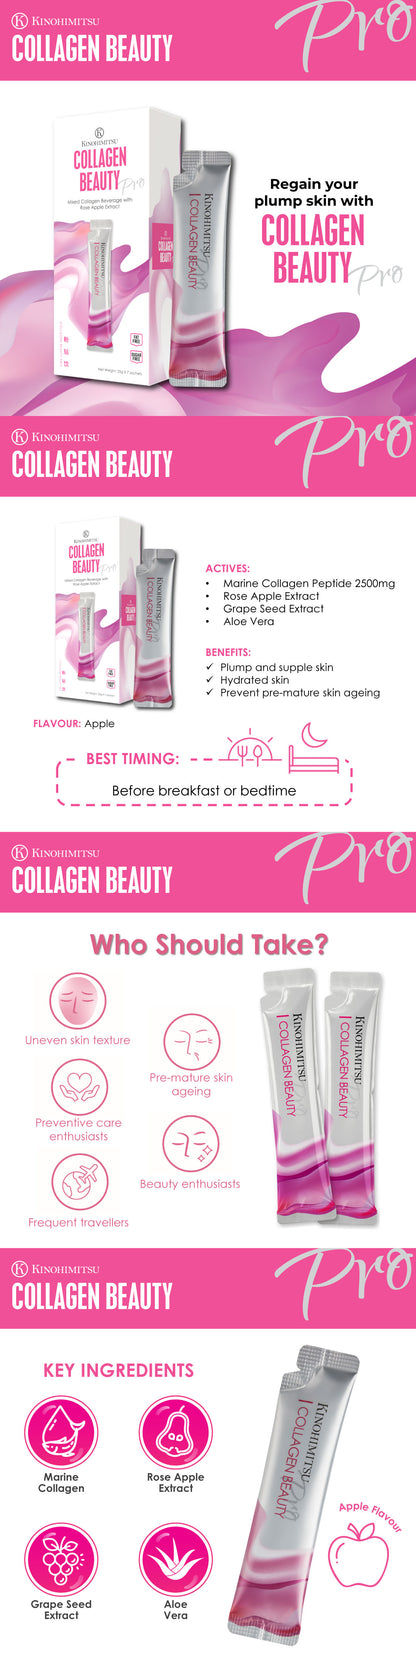 Kinohimitsu Collagen Beauty Pro